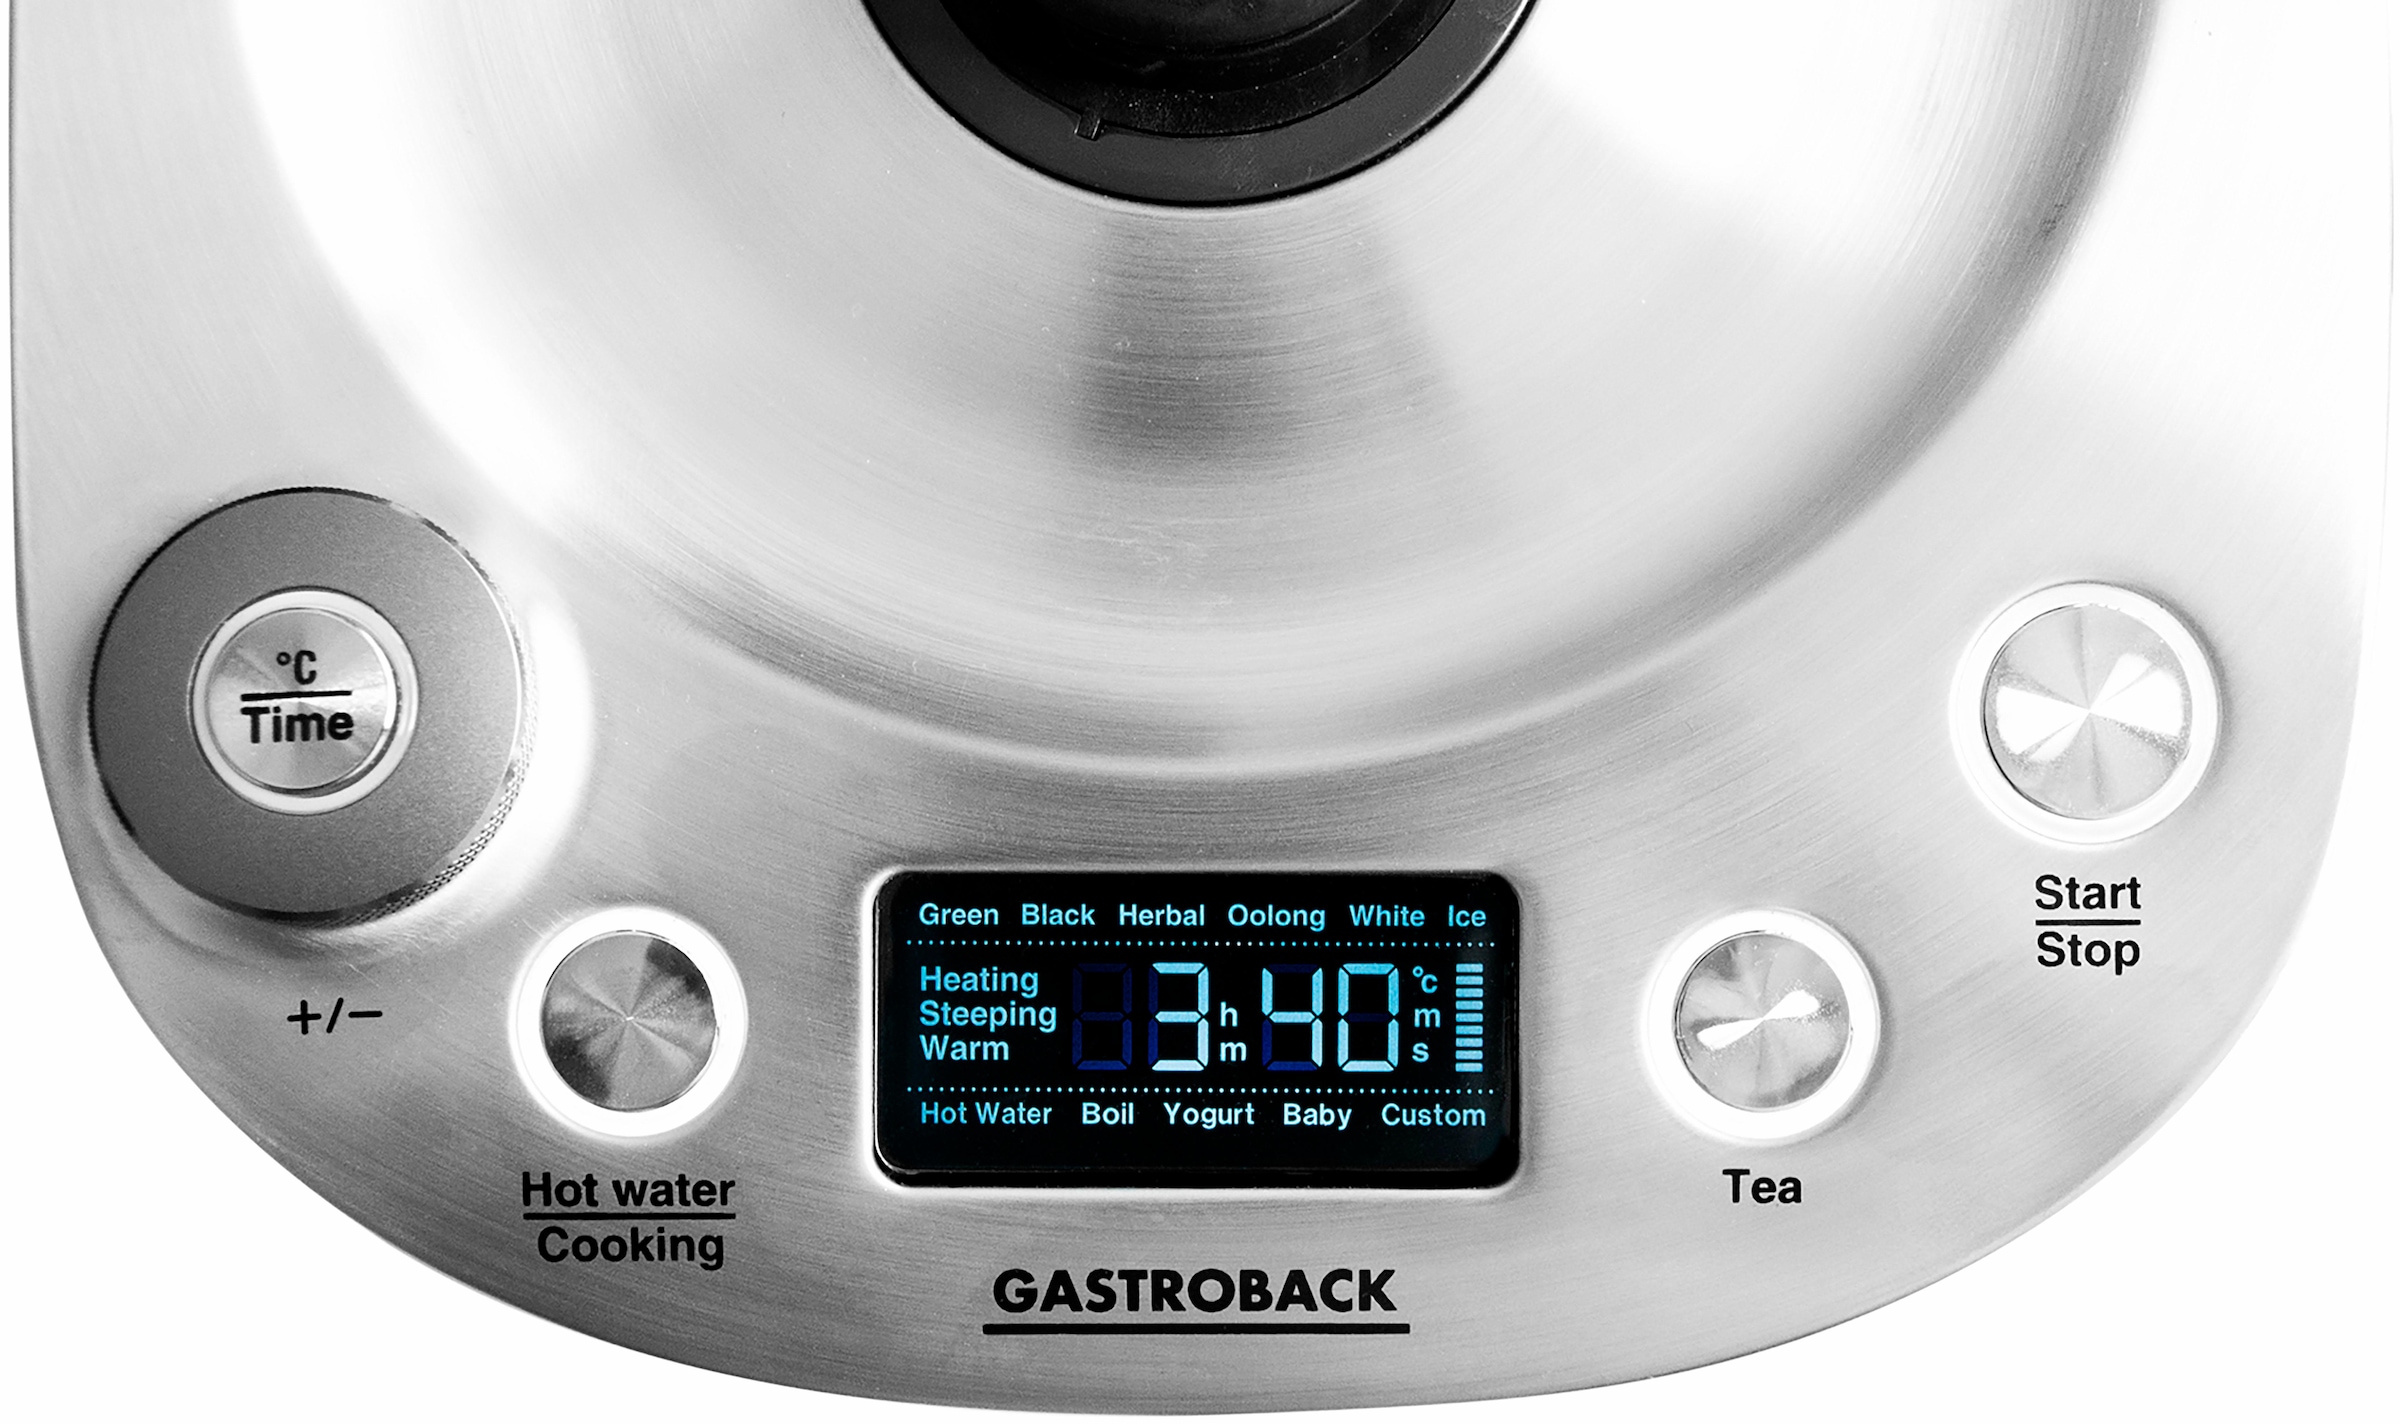 Gastroback Wasserkocher »Tea & More Advanced 42438«, 1,5 l, 1400 W